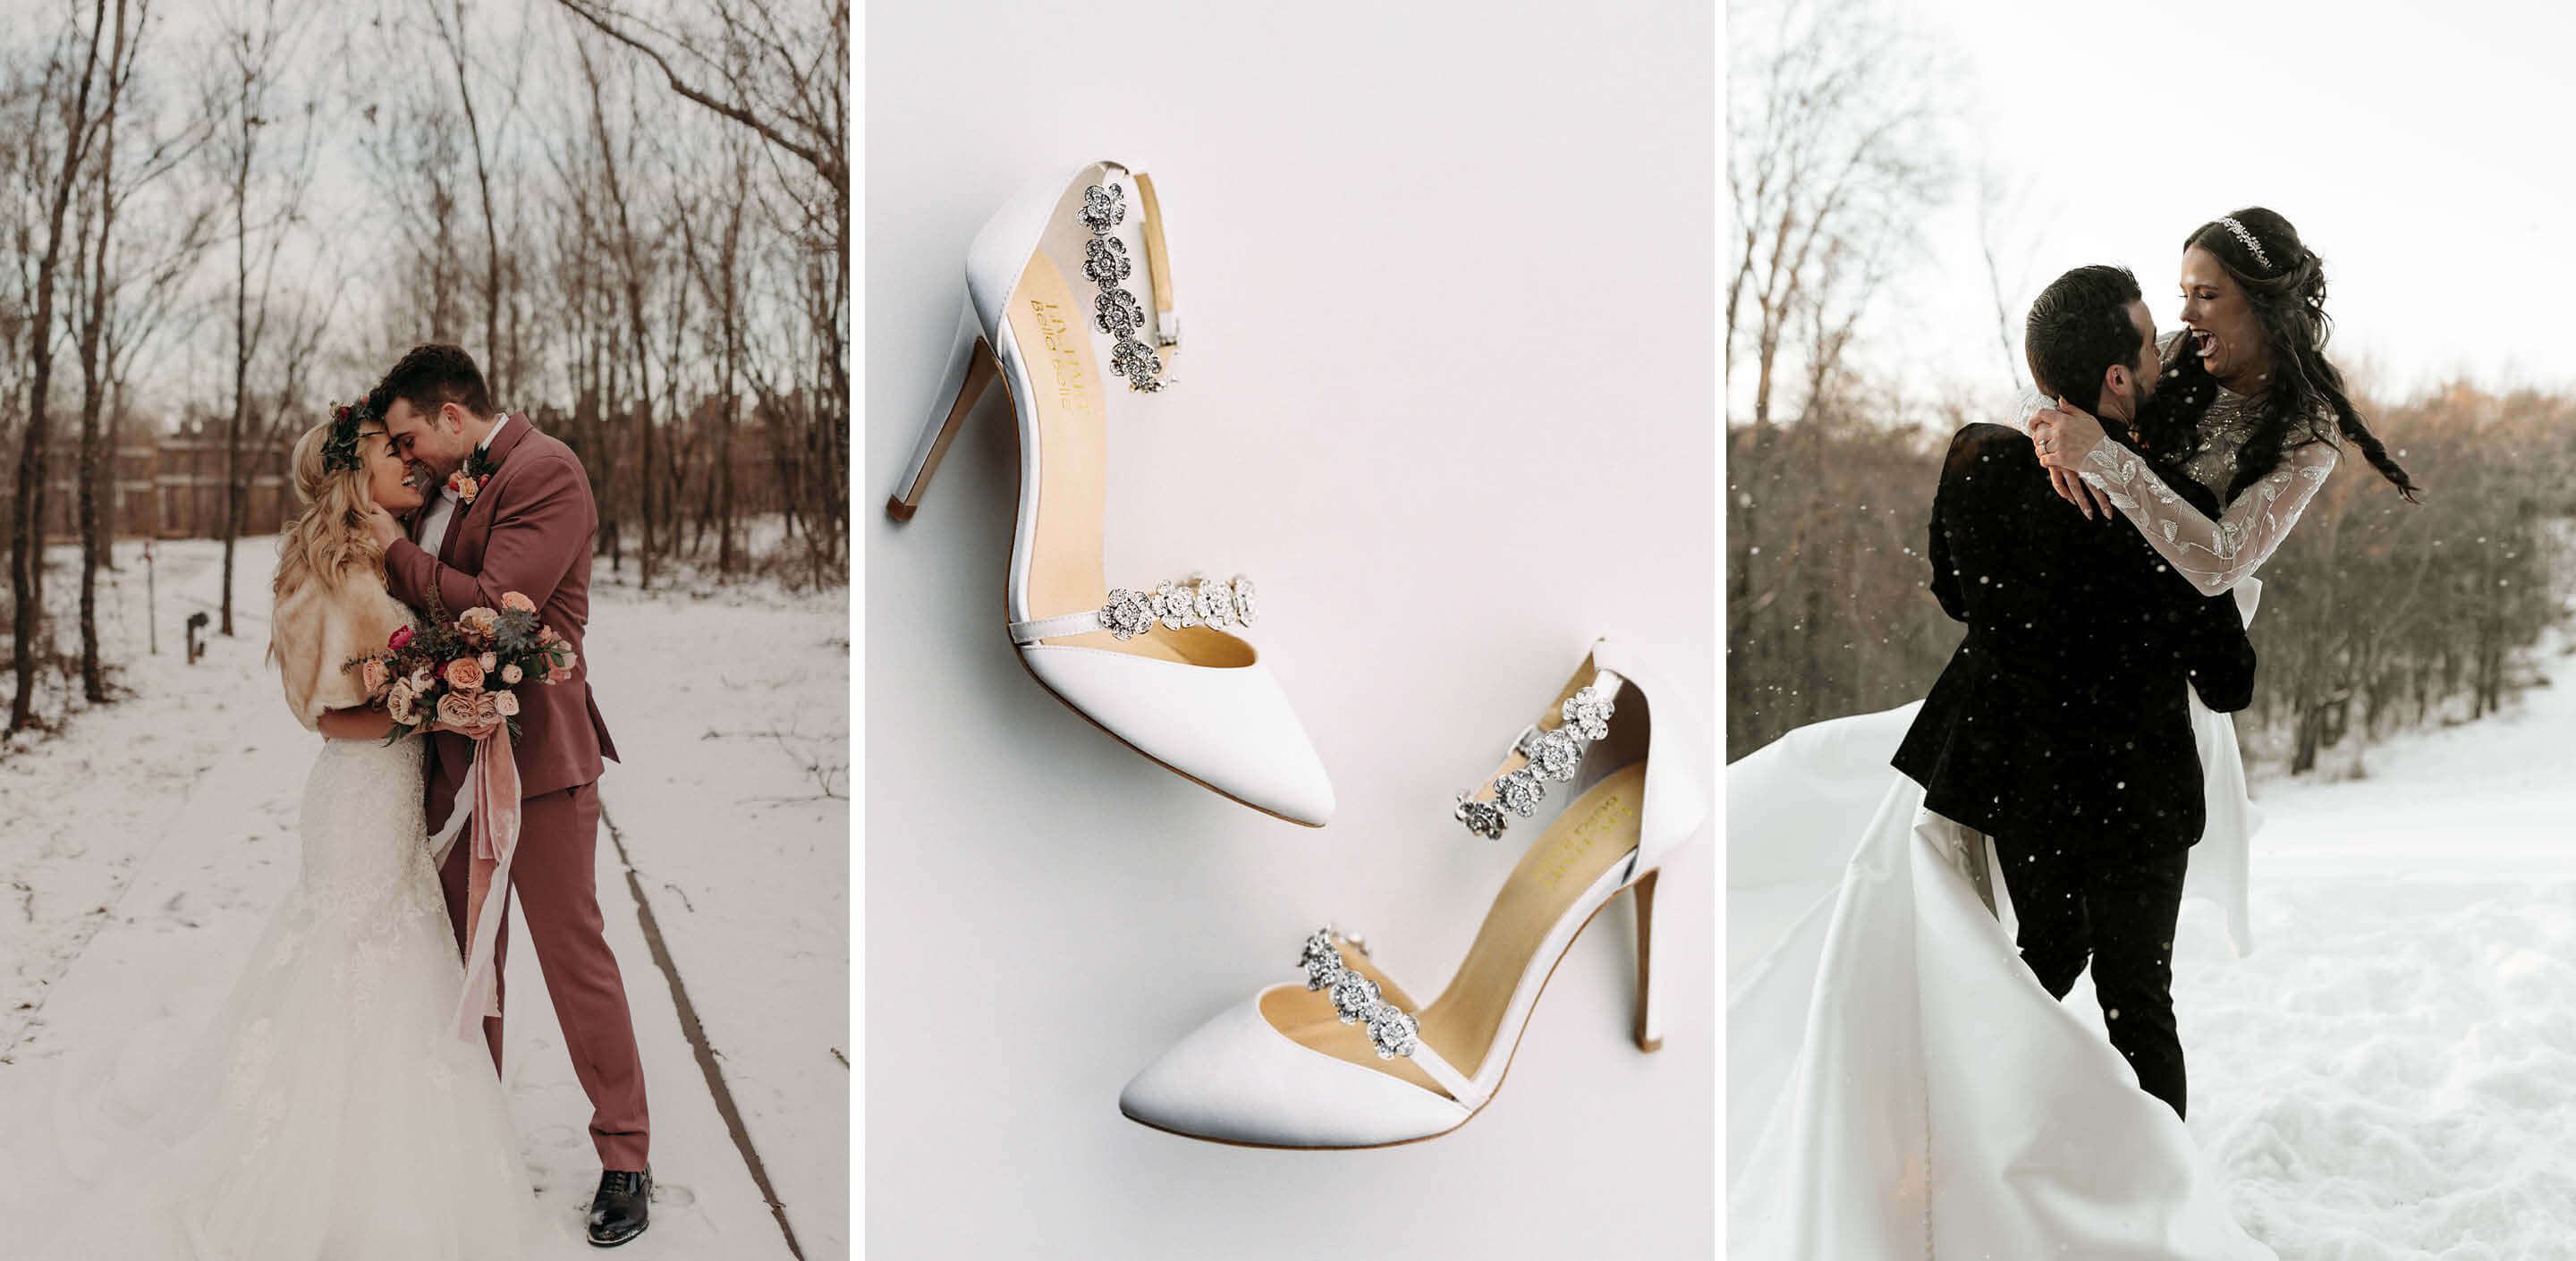 Premium Photo | Wedding shoes on the bride's feet